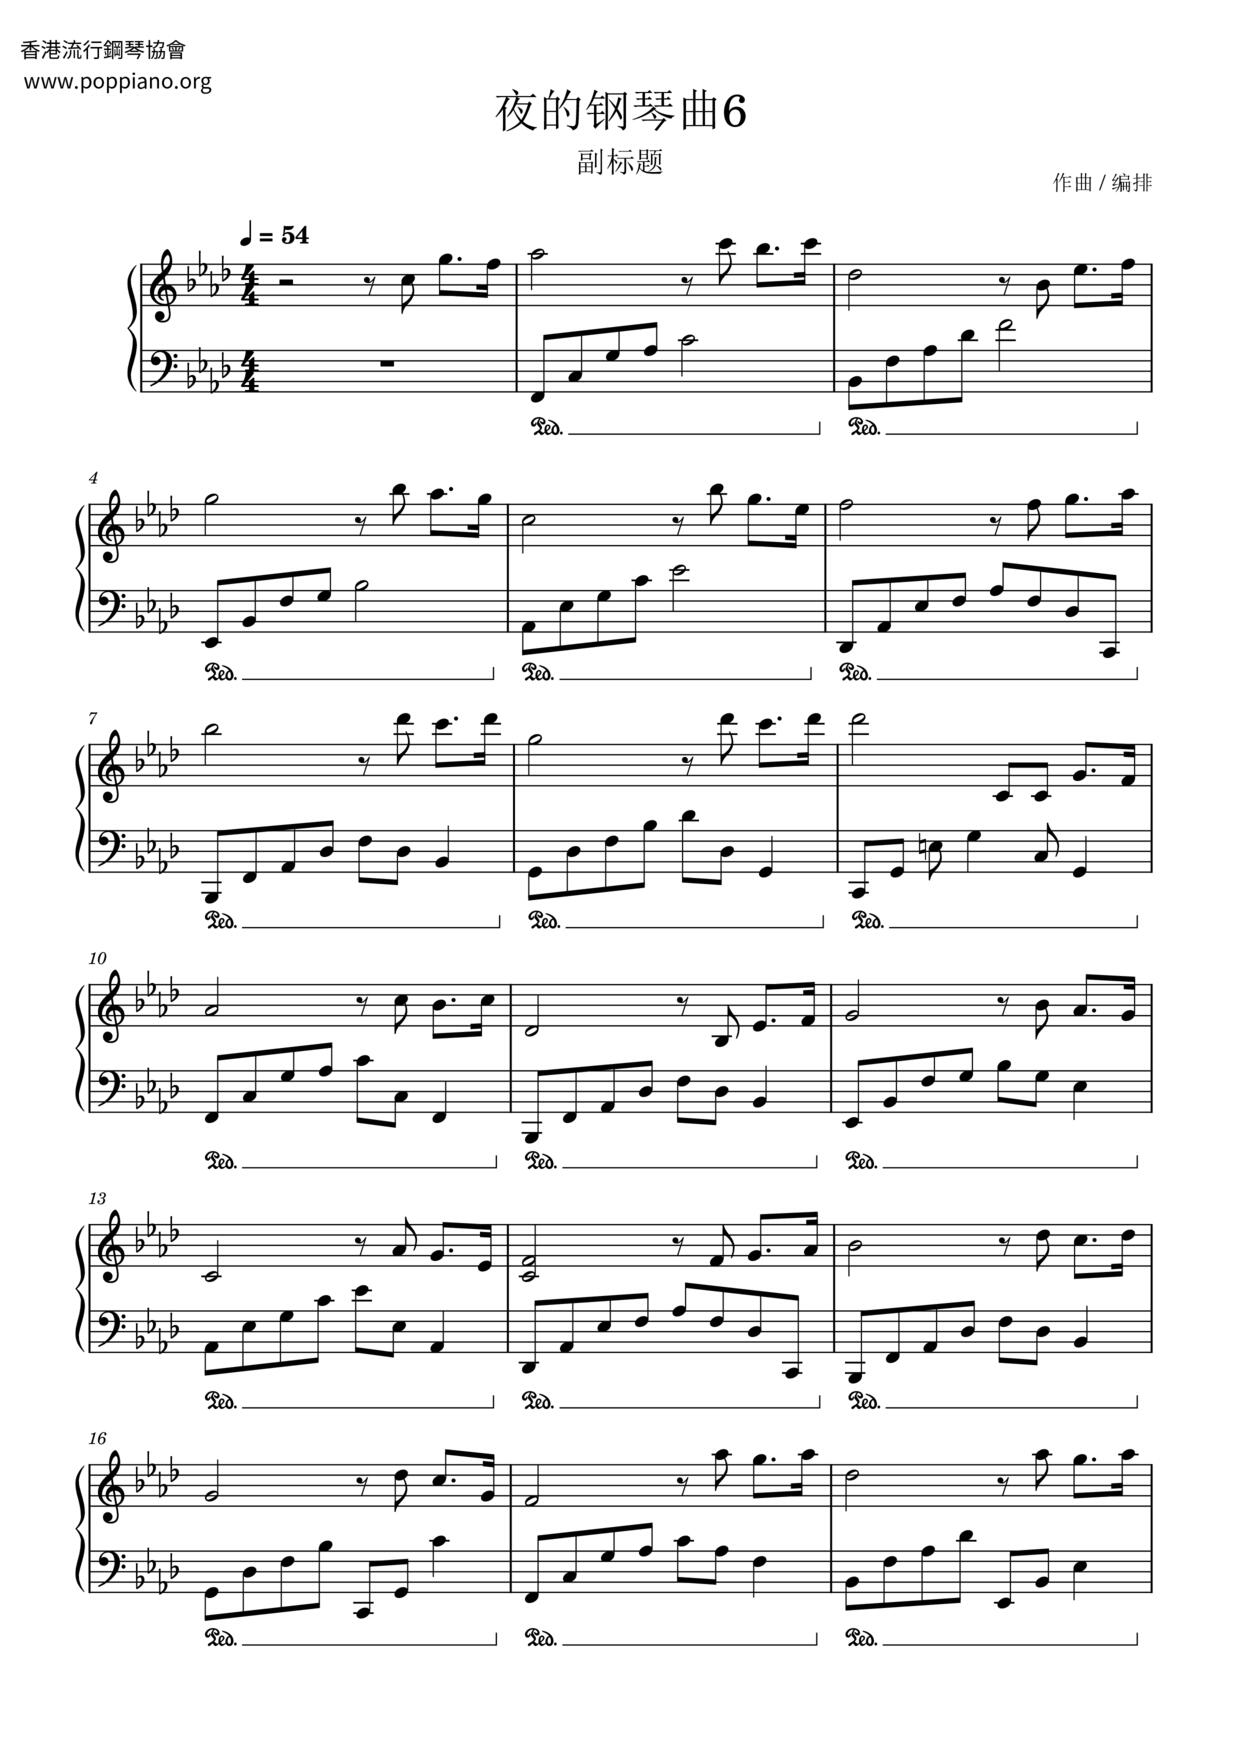 Melody Of The Night 6 Score